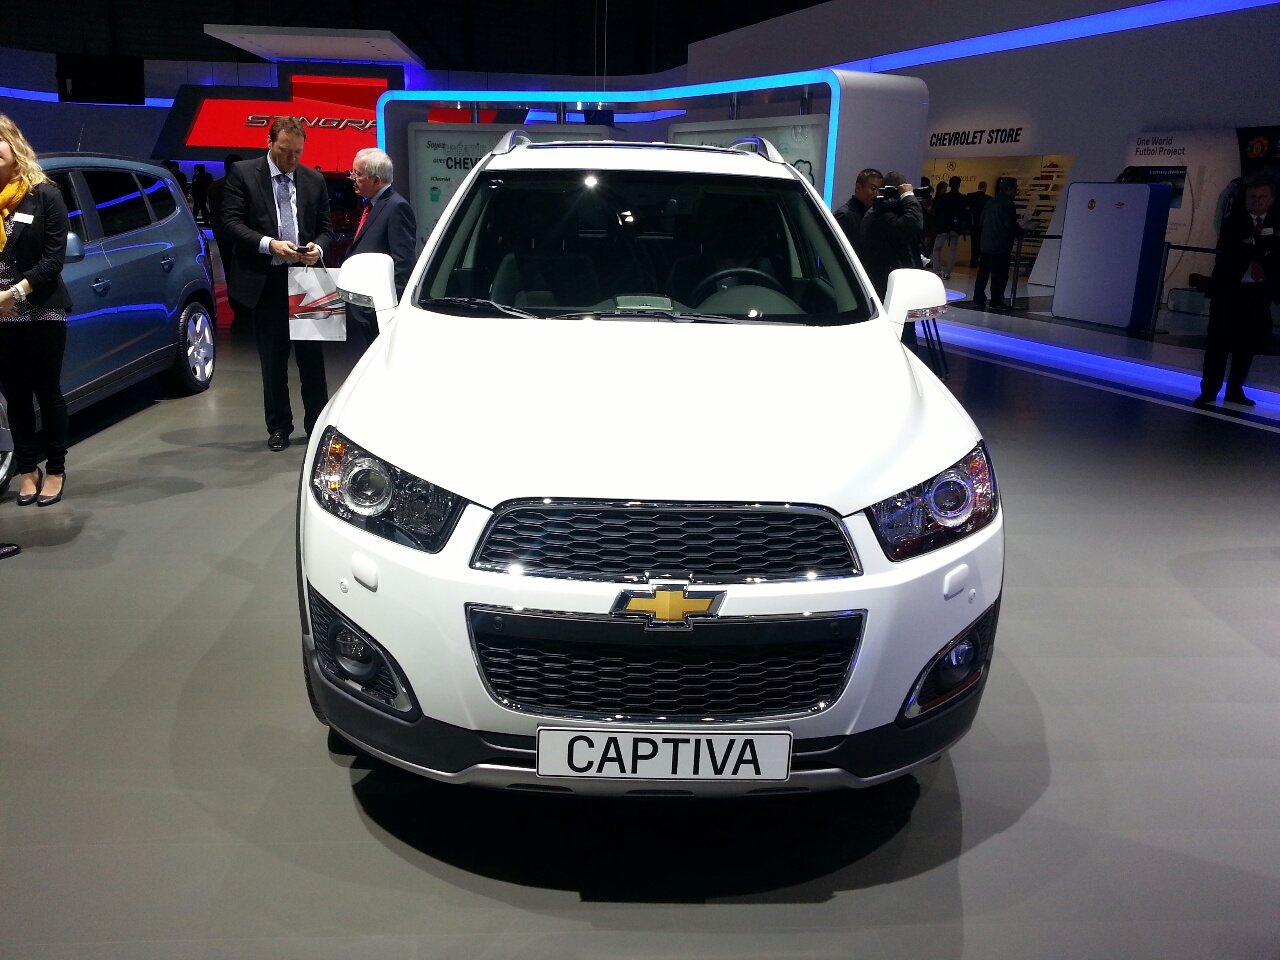 Geneva Live - Chevrolet Captiva facelift unveiled